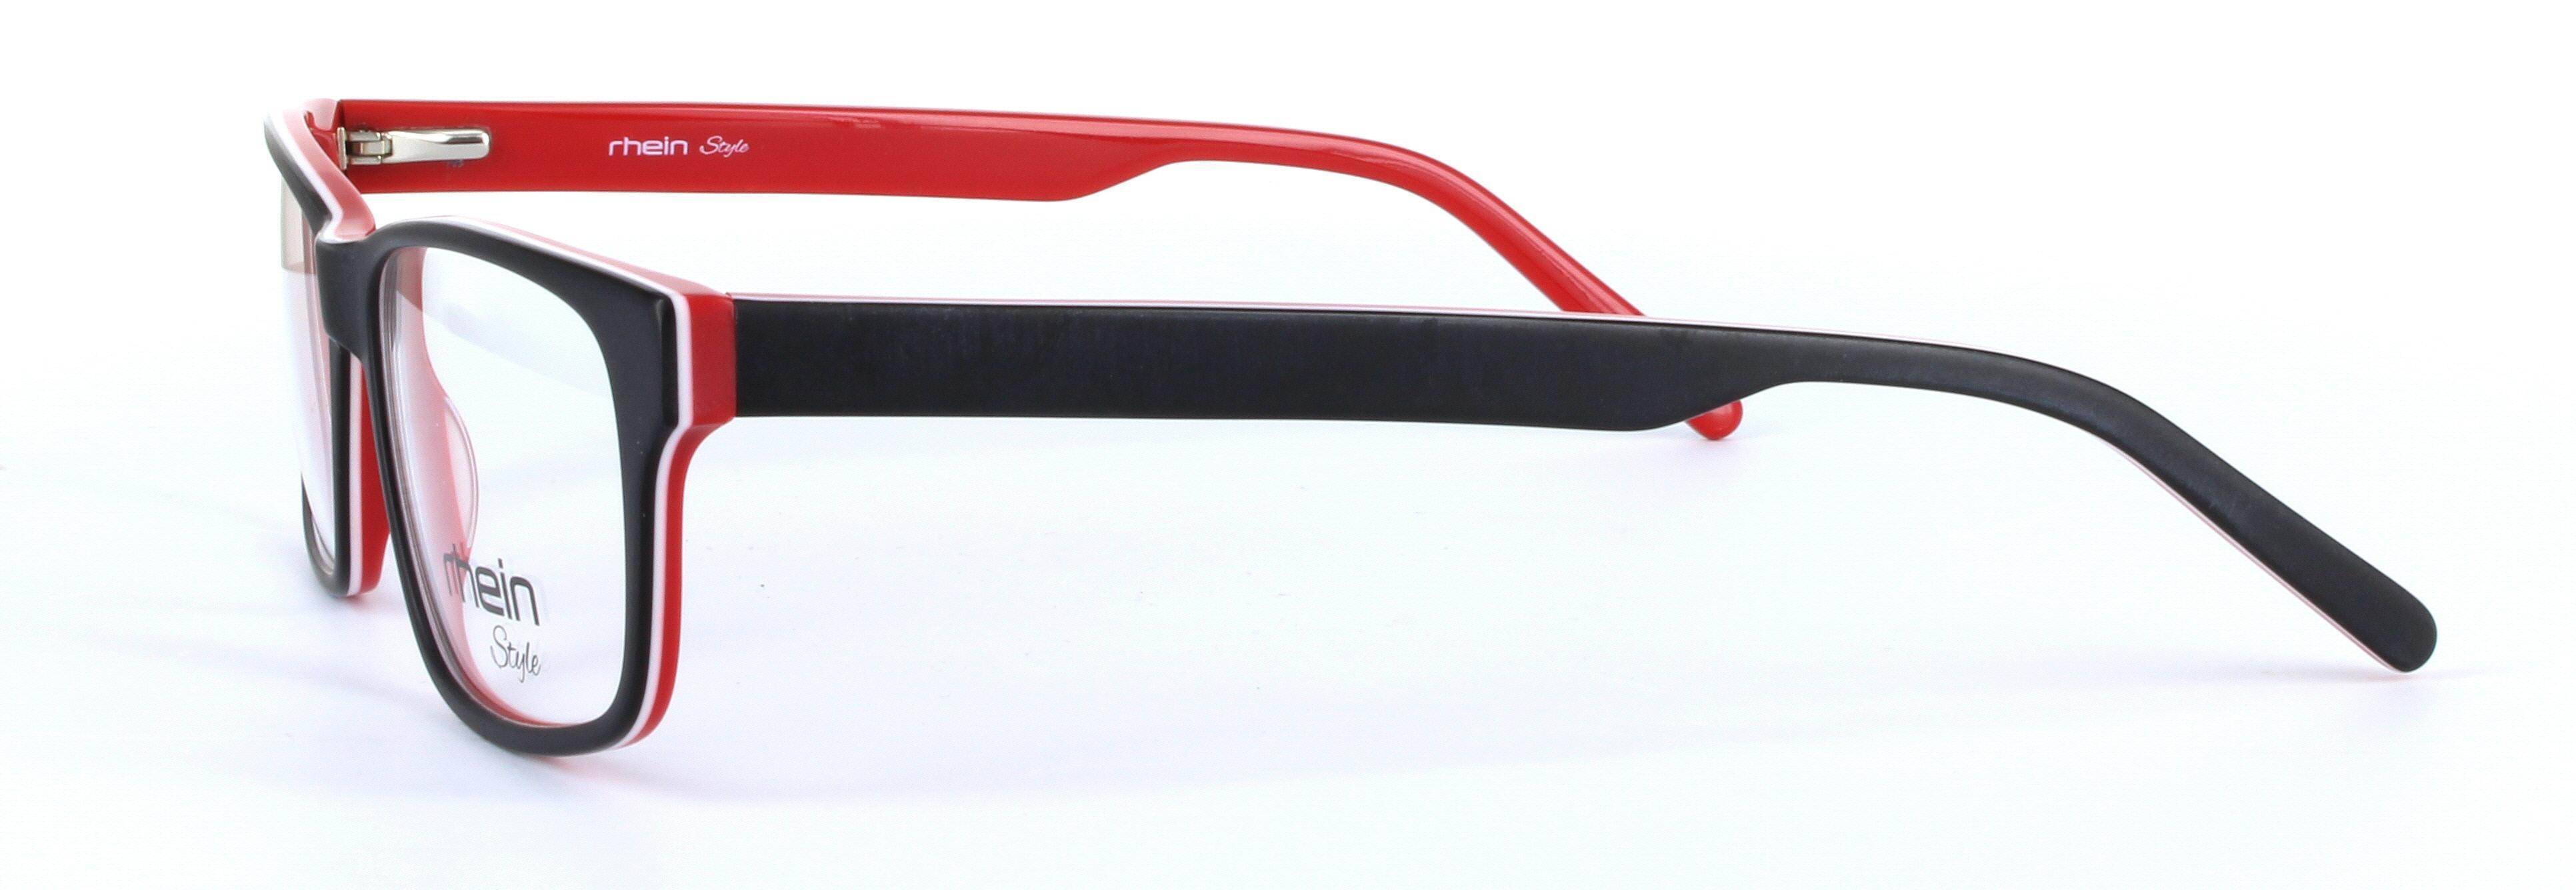 Carson Black and Red Full Rim Oval Rectangular Plastic Glasses - Image View 2